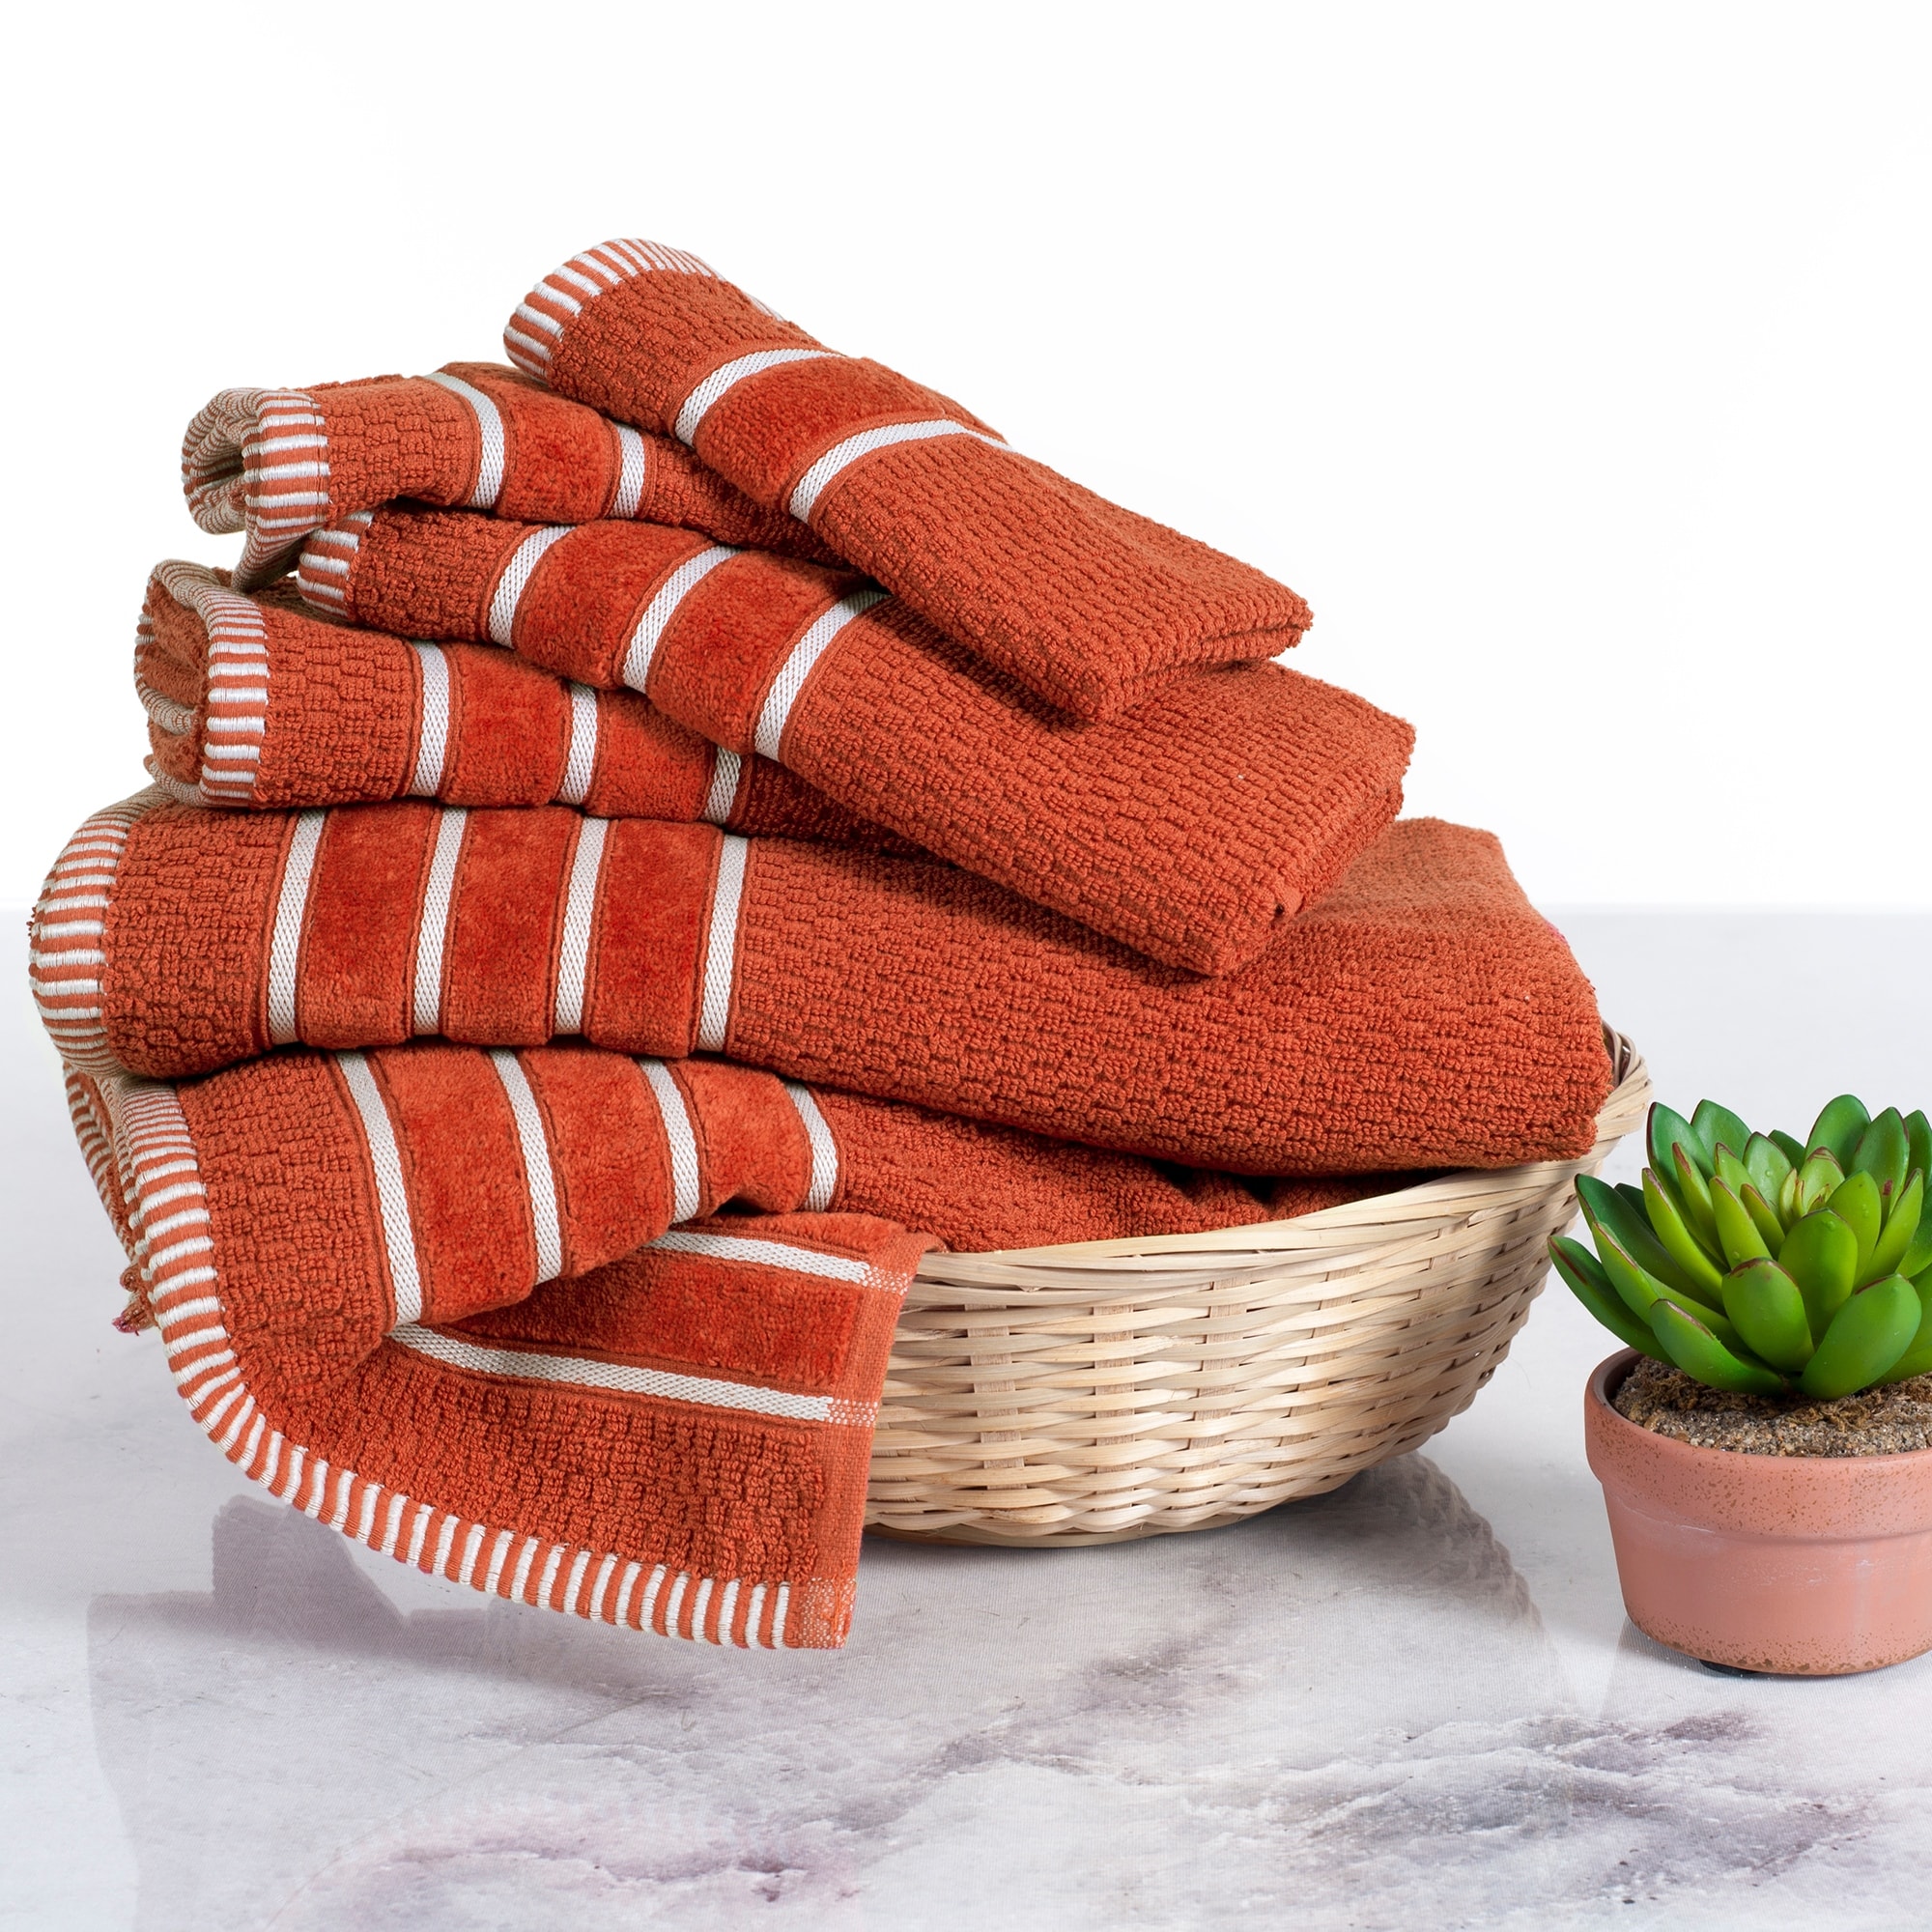 Simply Vera Vera Wang Signature Bath Towel, Bath Sheet, Hand Towel or  Washcloth